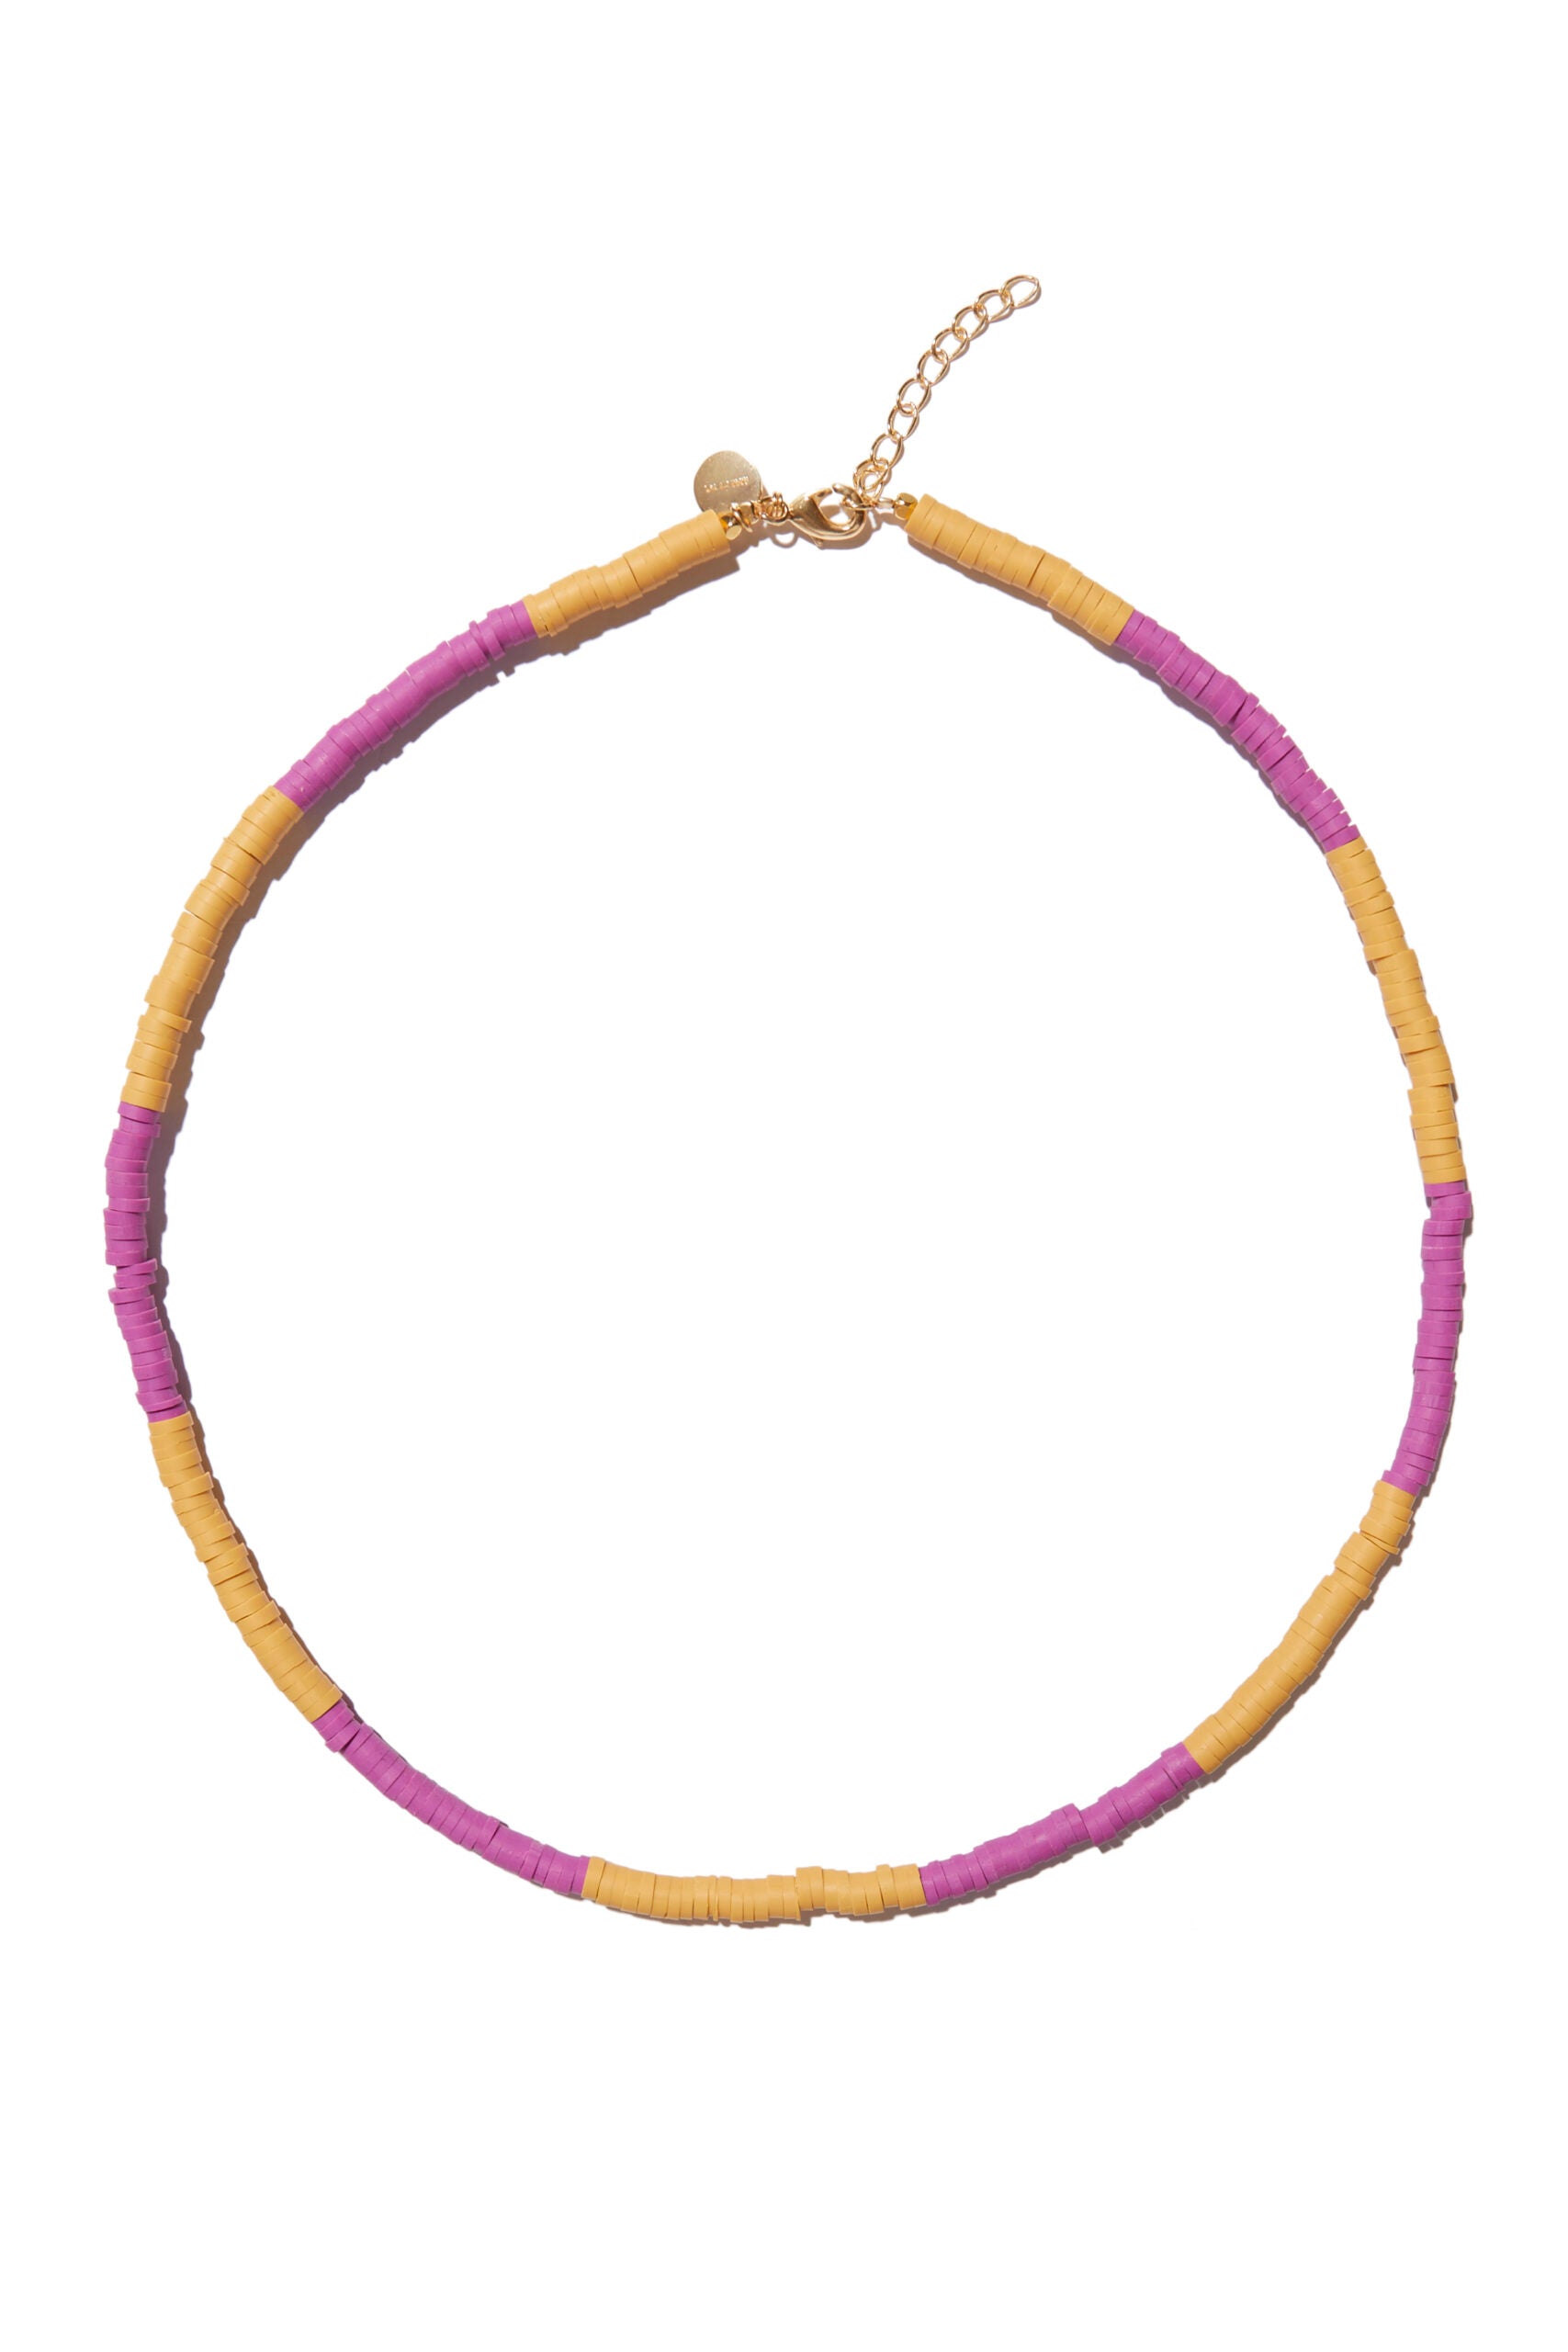 Fleur orange purple necklace